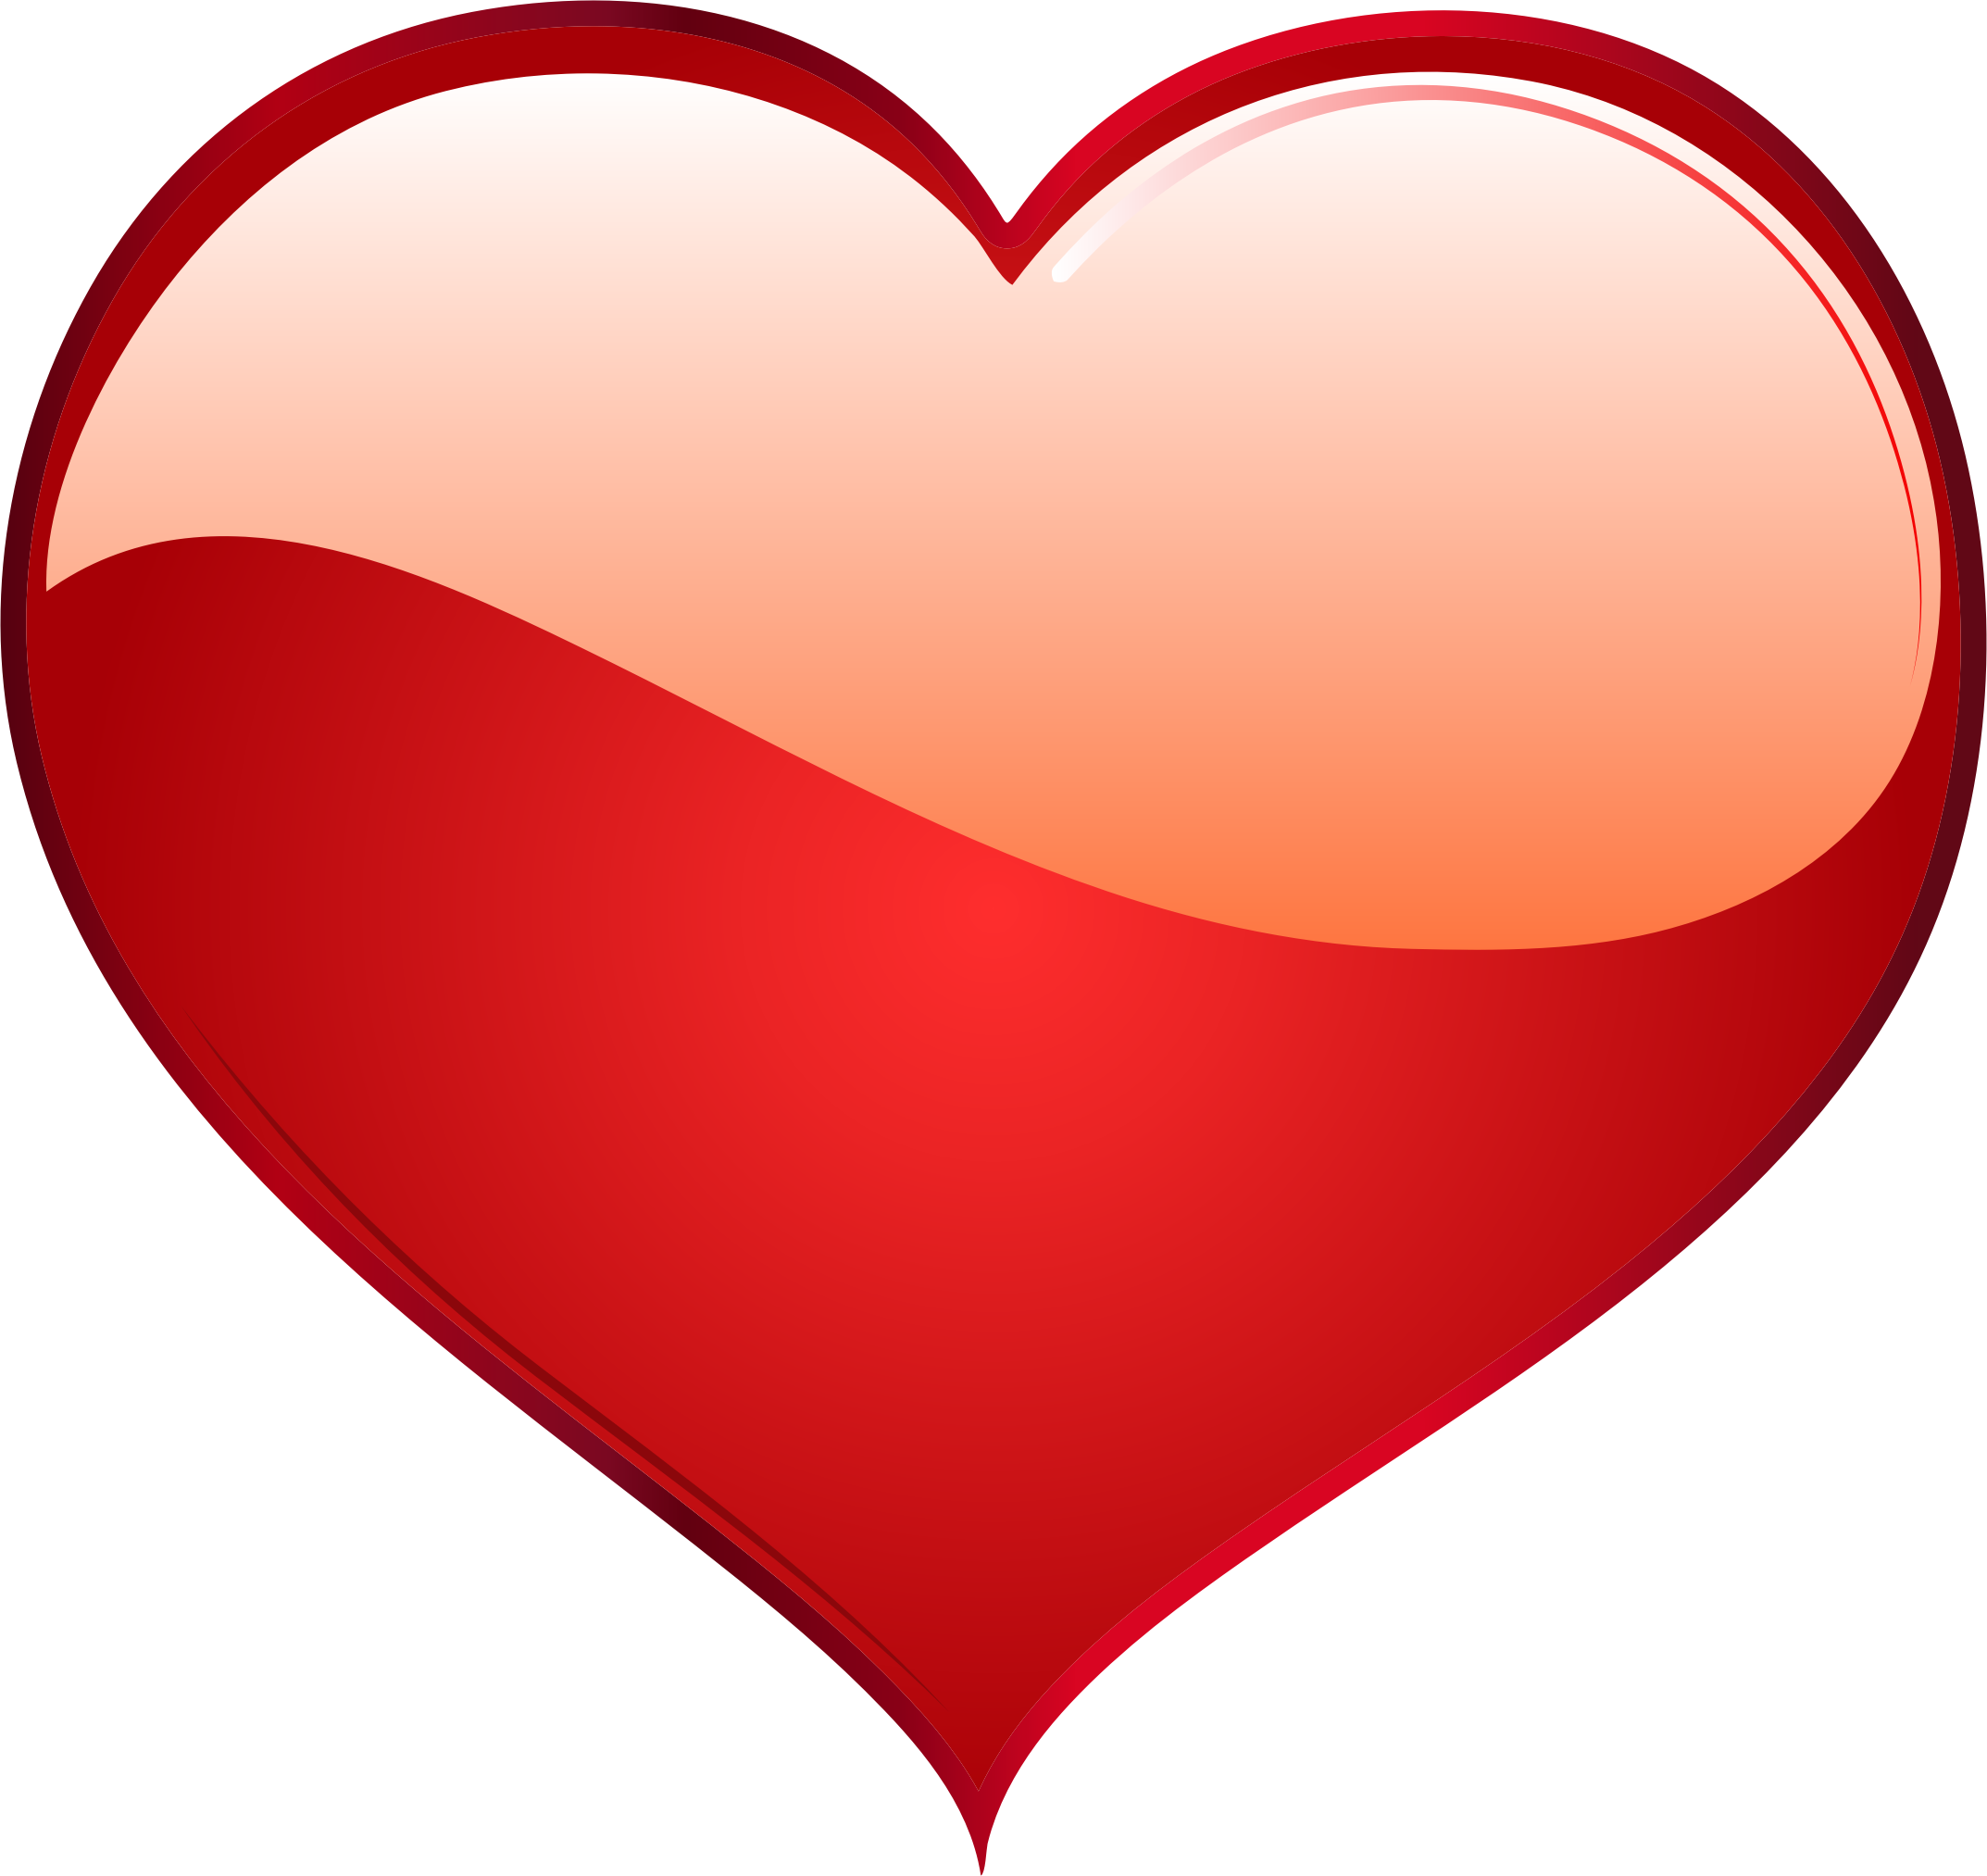 Download Red Heart Transparent Hq Png Image Freepngimg